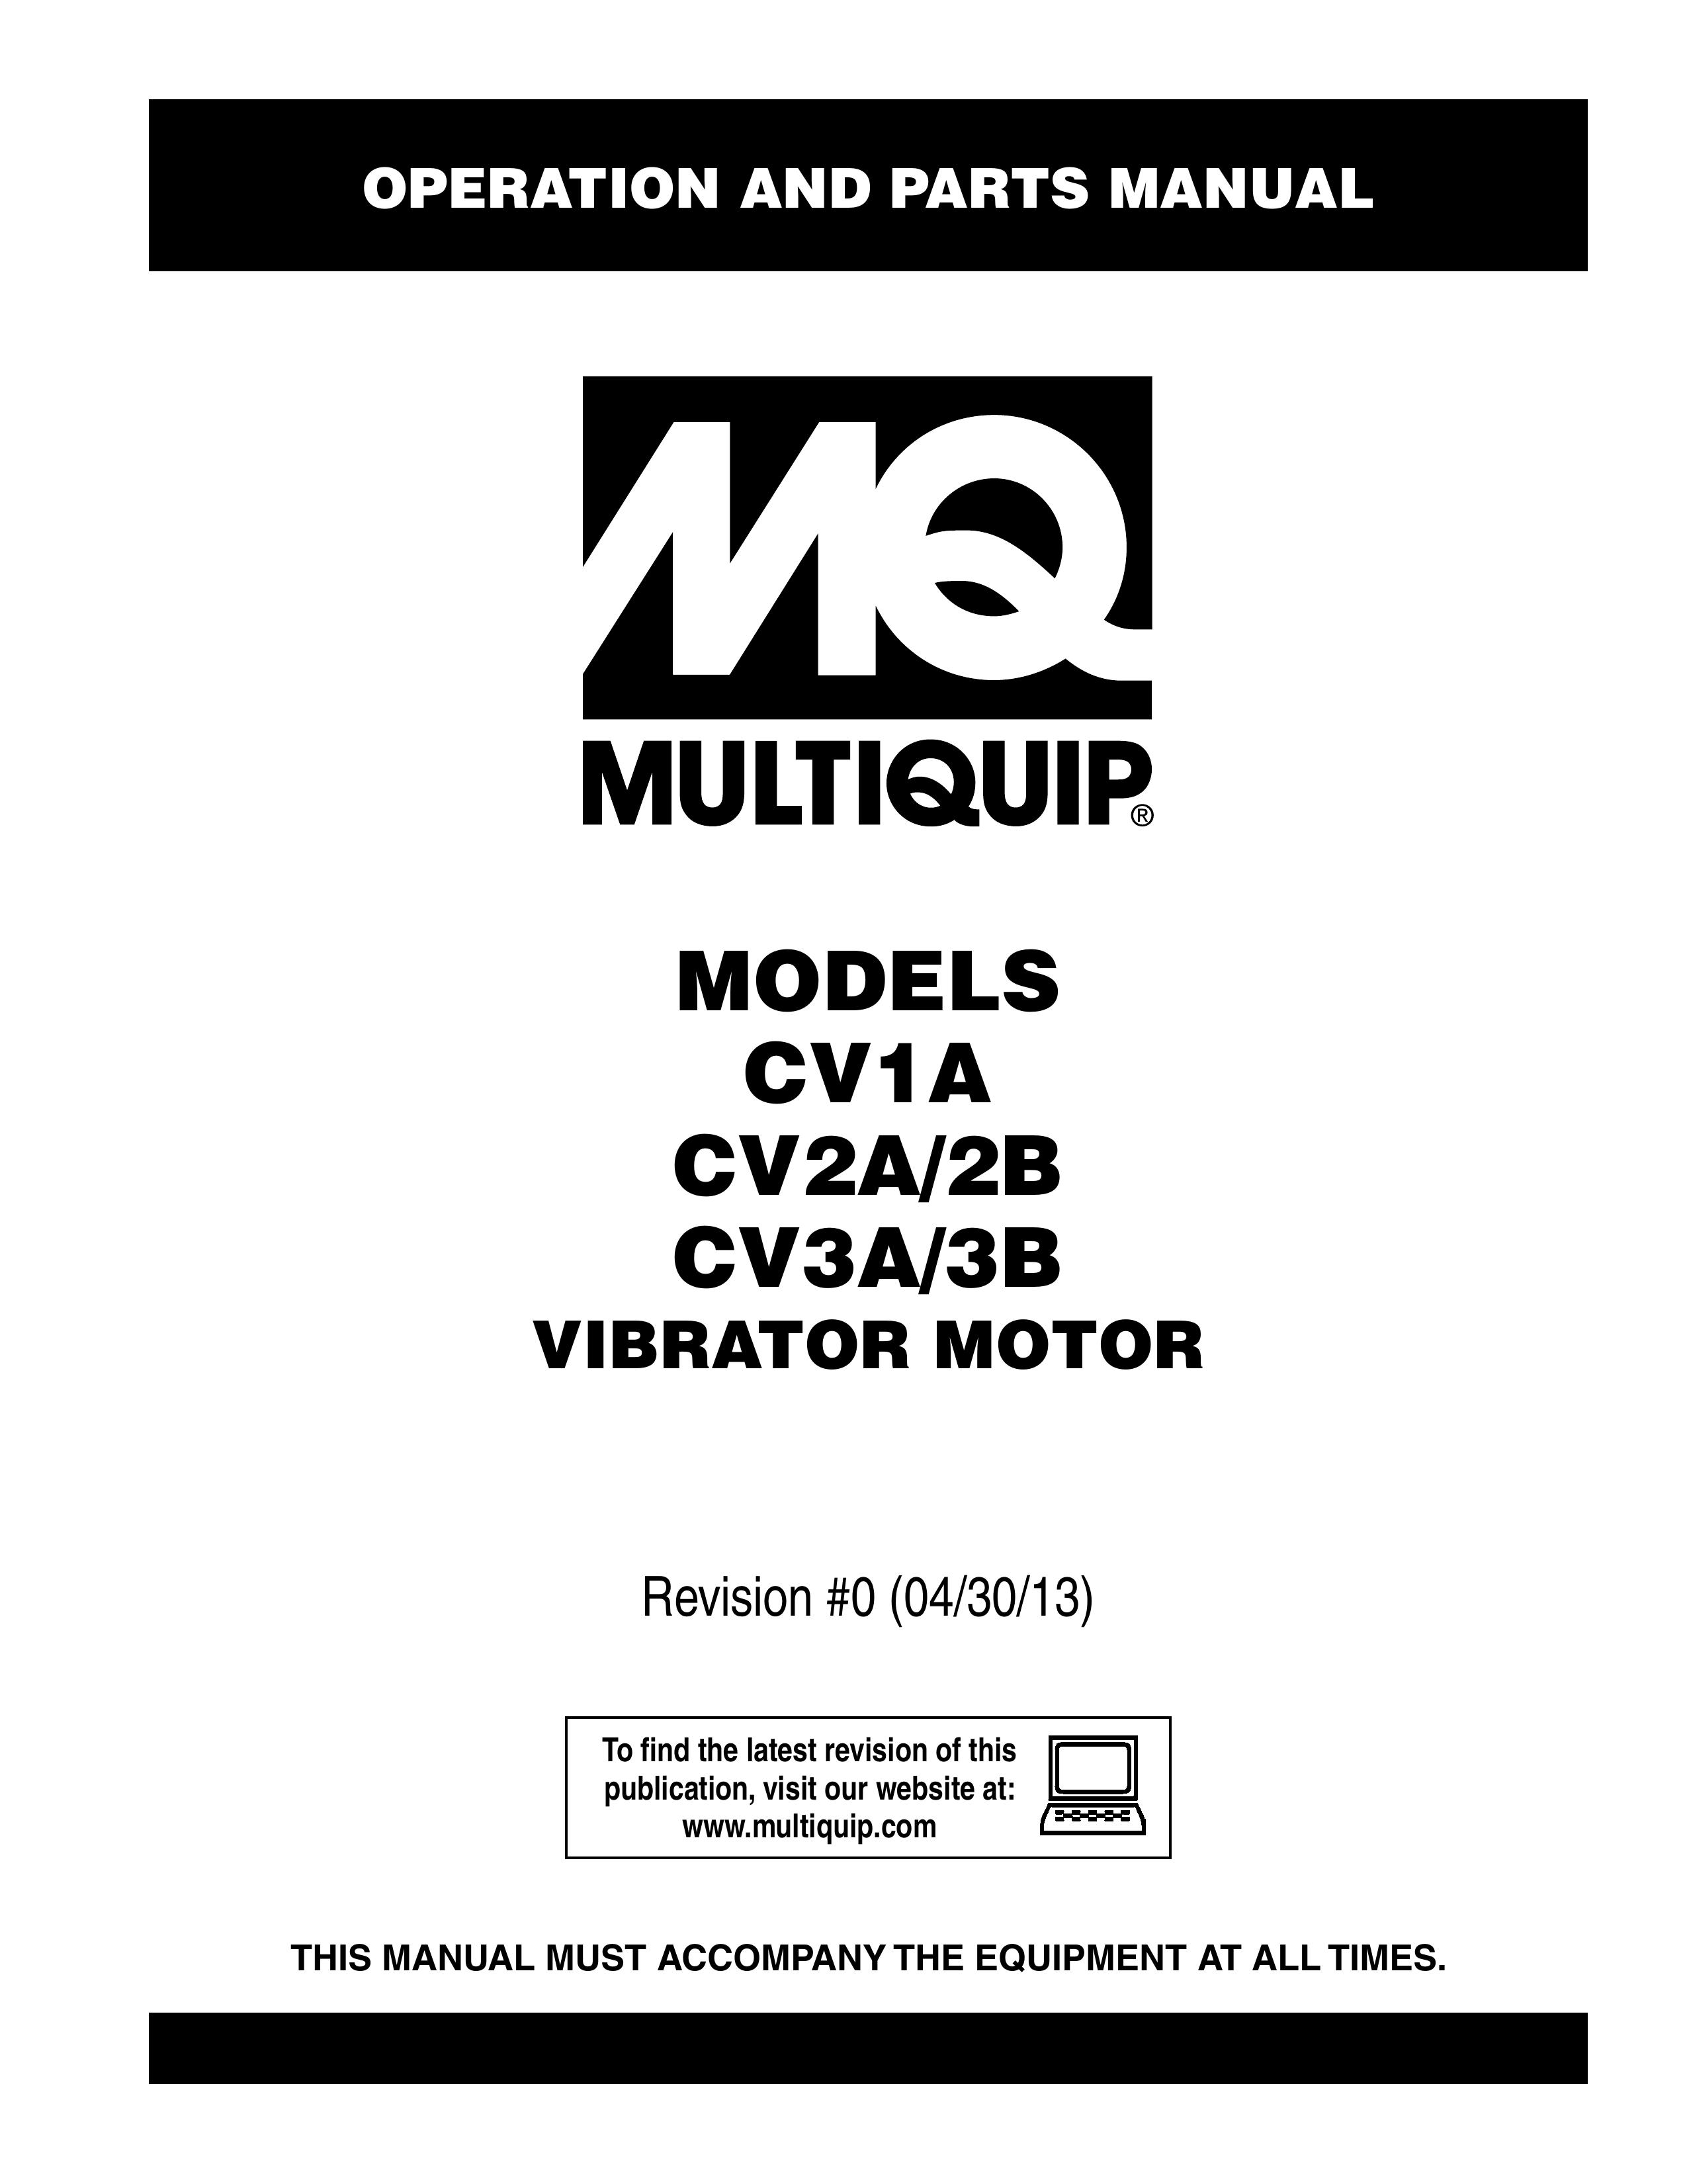 Multiquip CV1A Outboard Motor User Manual